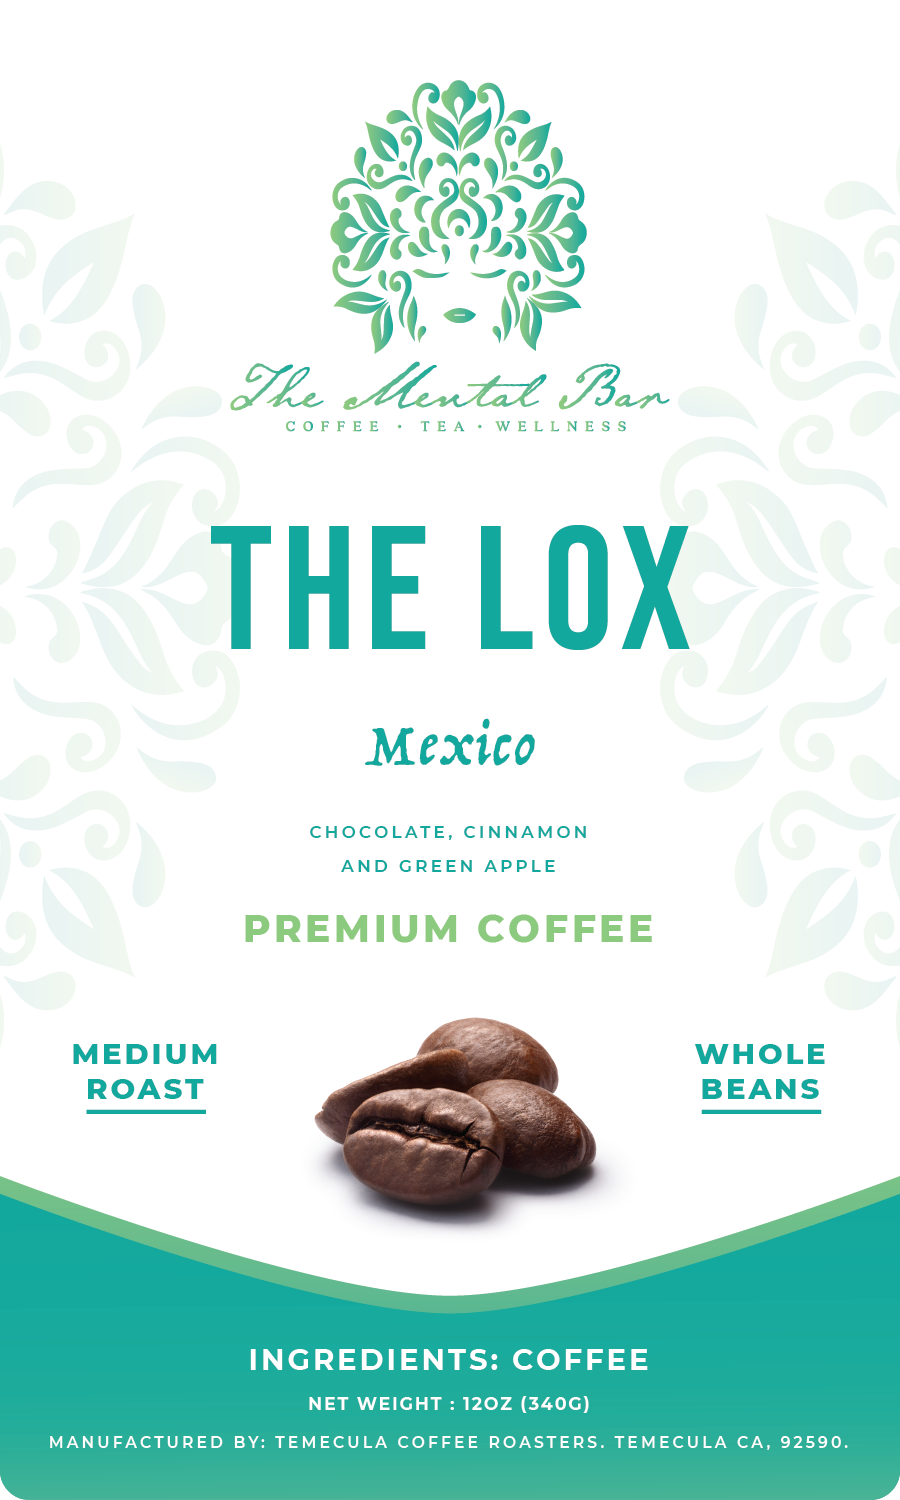 The Lox (Mexico) - The Mental Bar